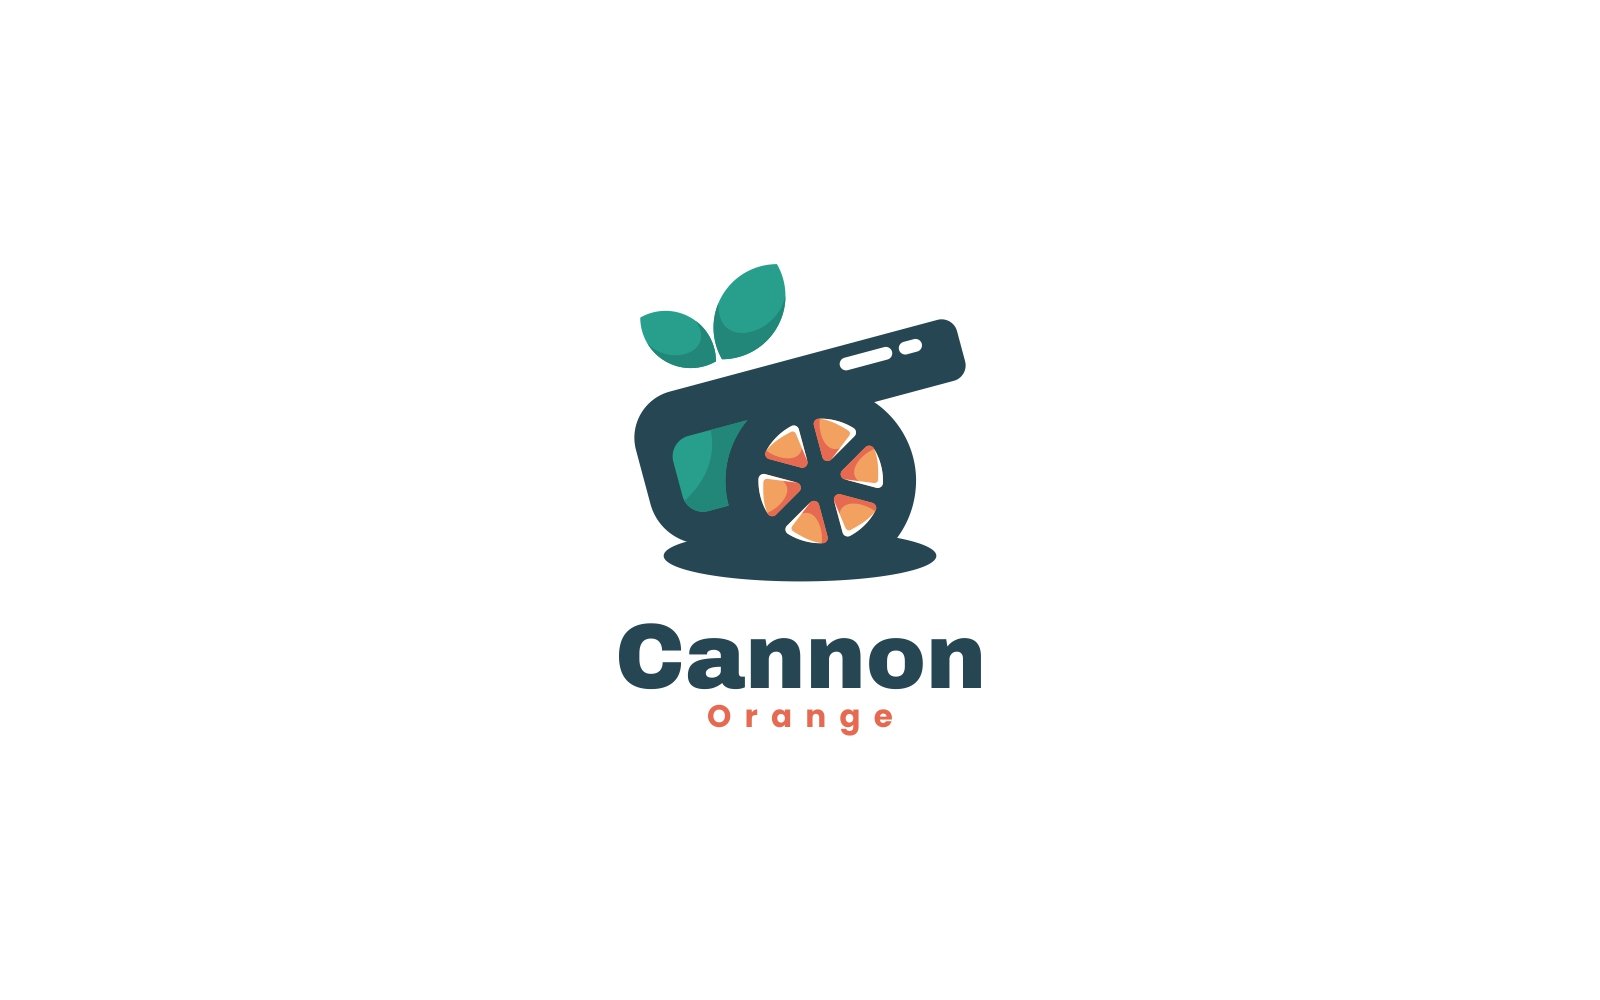 Cannon Orange Simple Logo